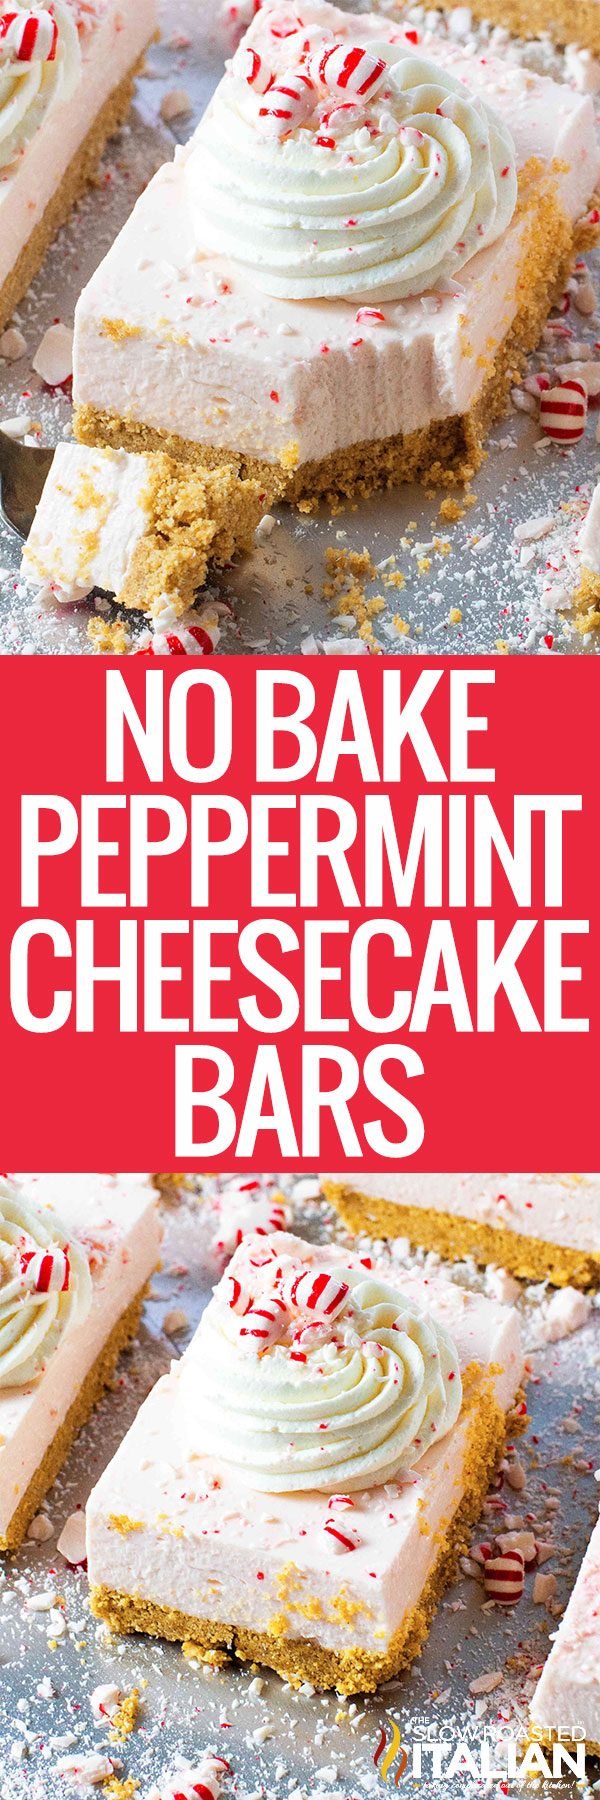 no-bake-peppermint-cheesecake-bars-pin-8380106